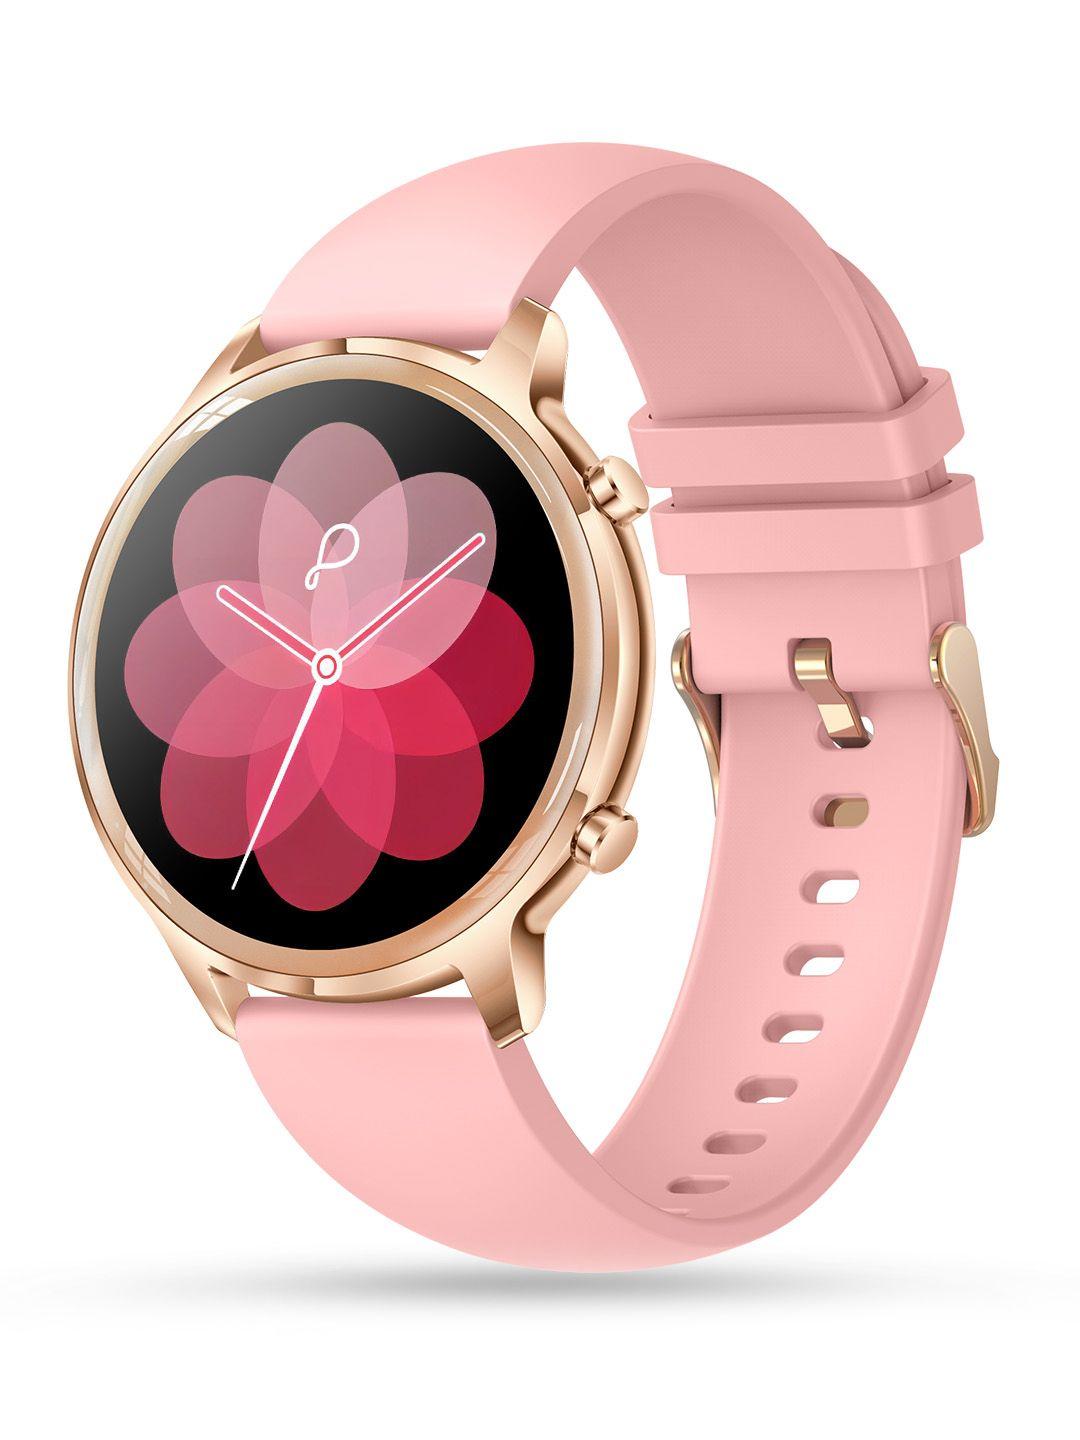 pebble celia 1.32" ips display smart watch with bt calling & female health monitor